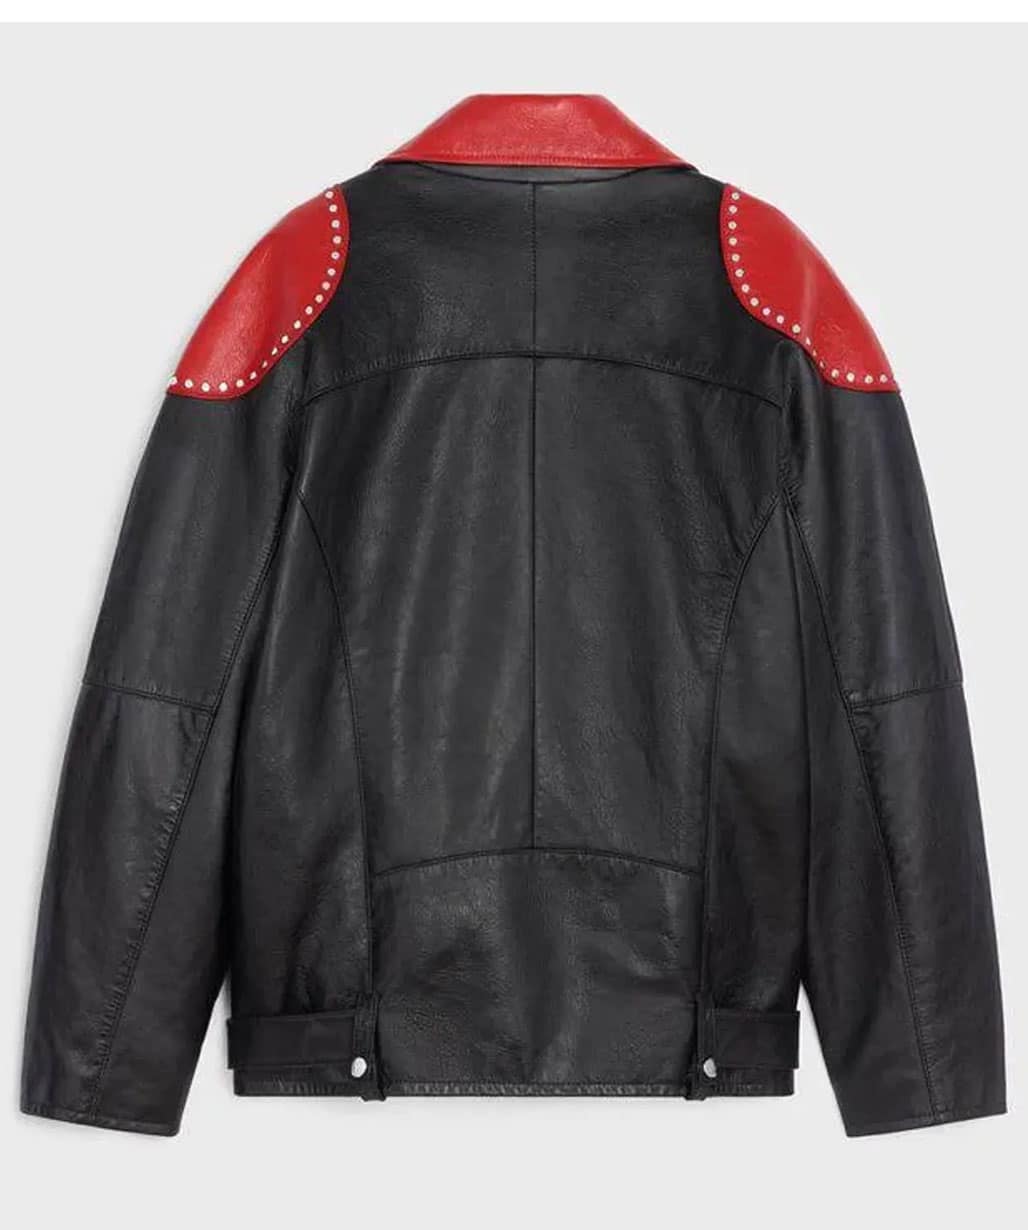 Zayn-Malik-Love-Like-This-Studded-Leather-Jacket-sale